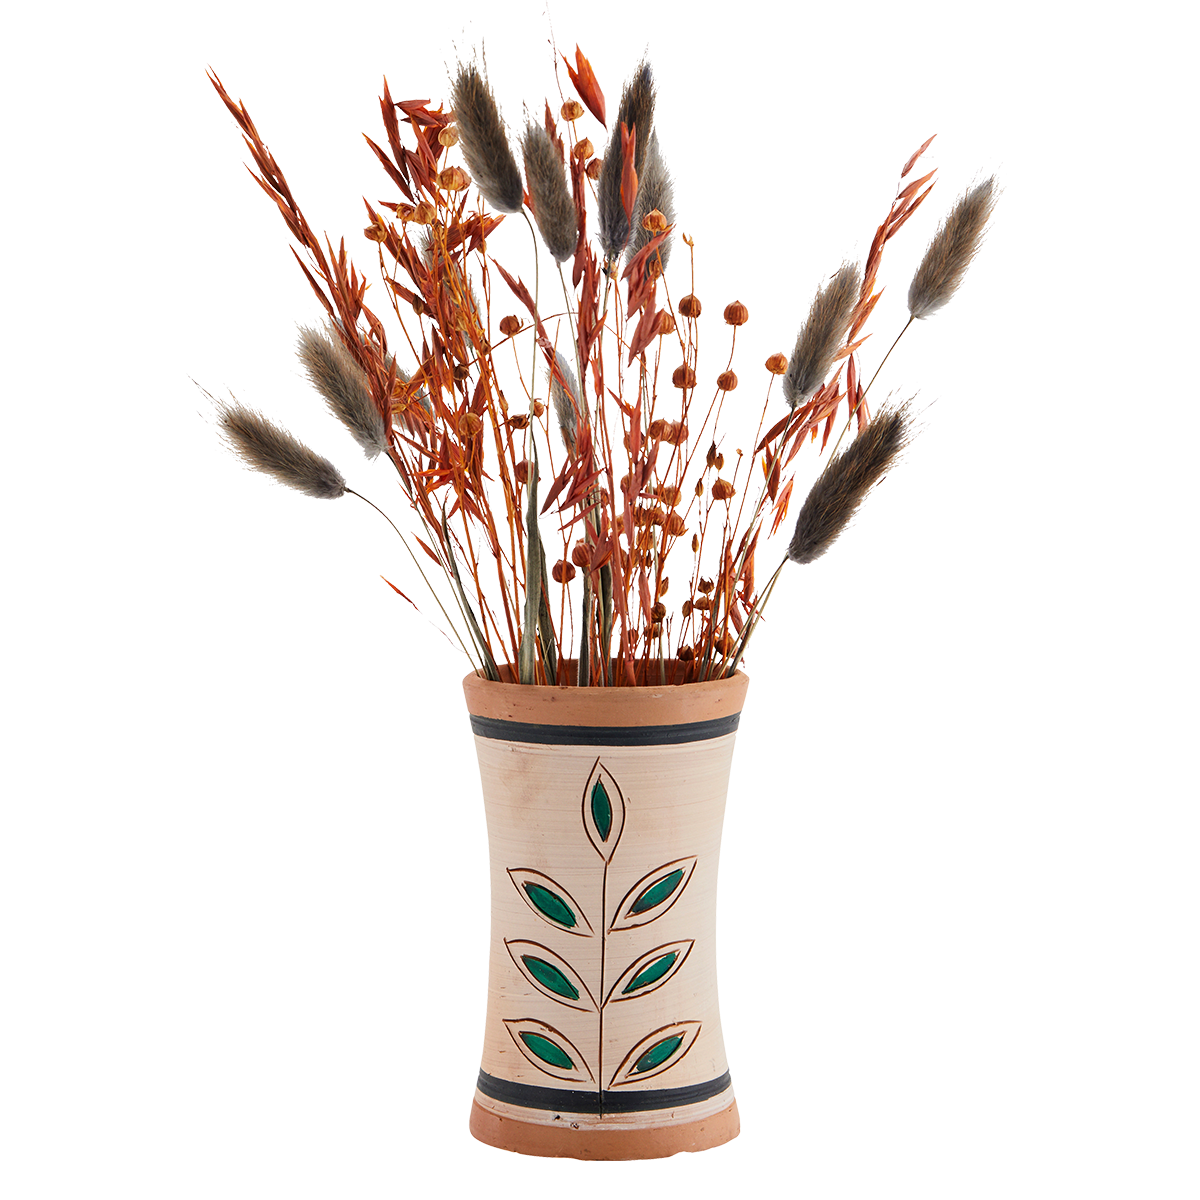 Hand painted terracotta vase